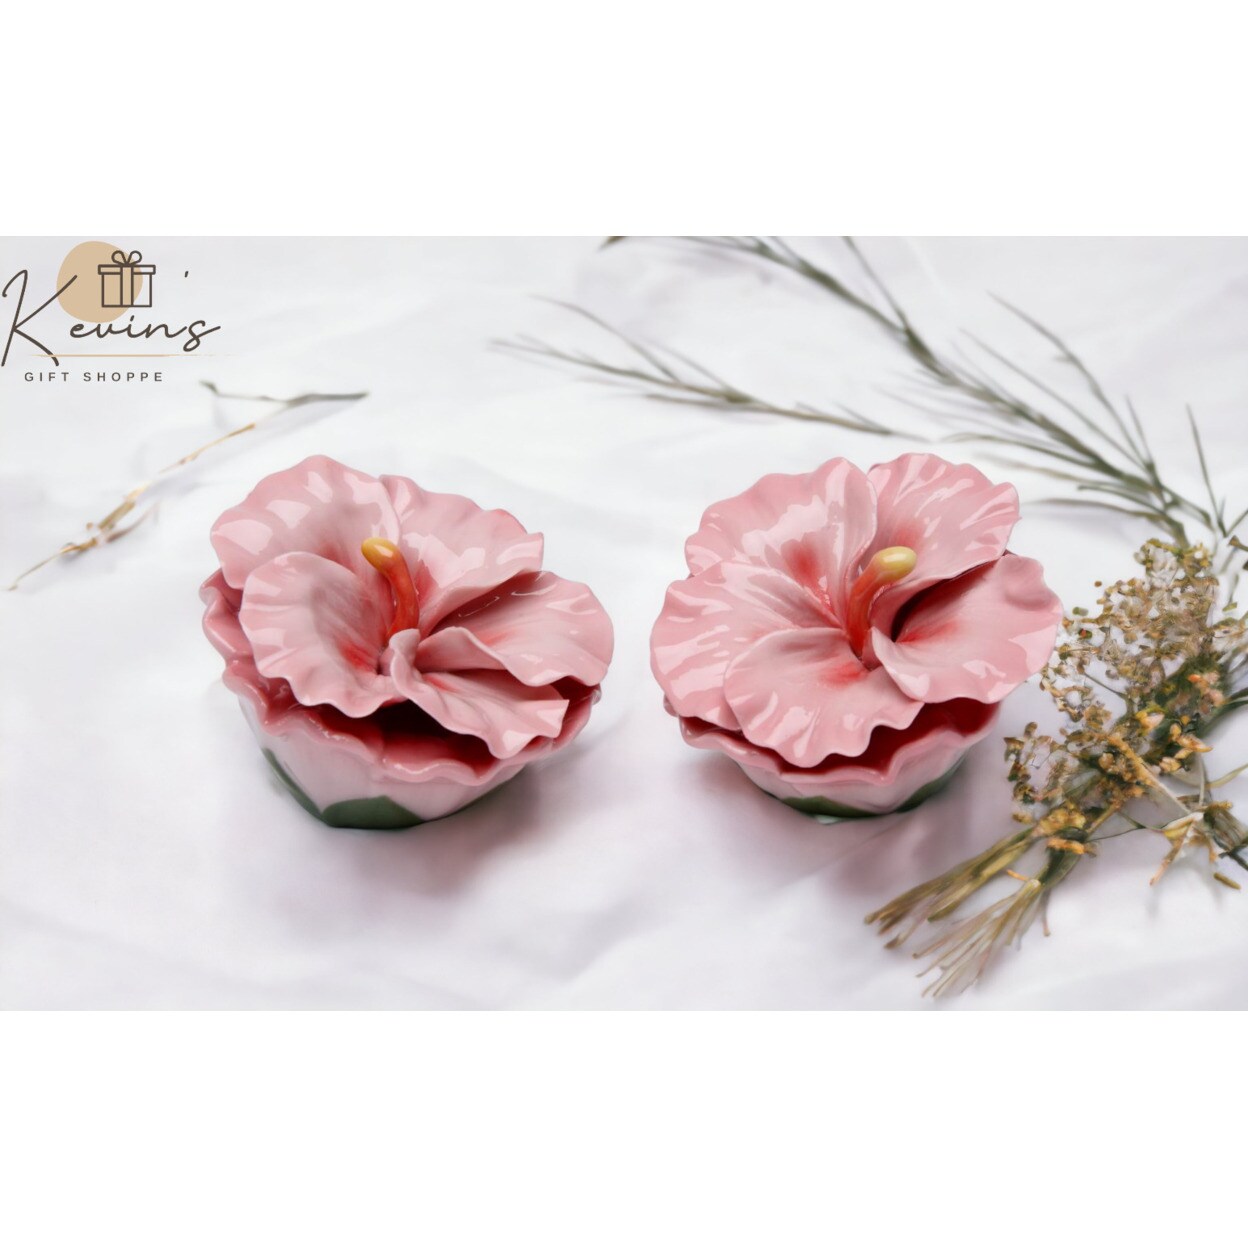 kevinsgiftshoppe Ceramic Hibiscus Flower Salt and Pepper Shakers Home Decor   Kitchen Decor